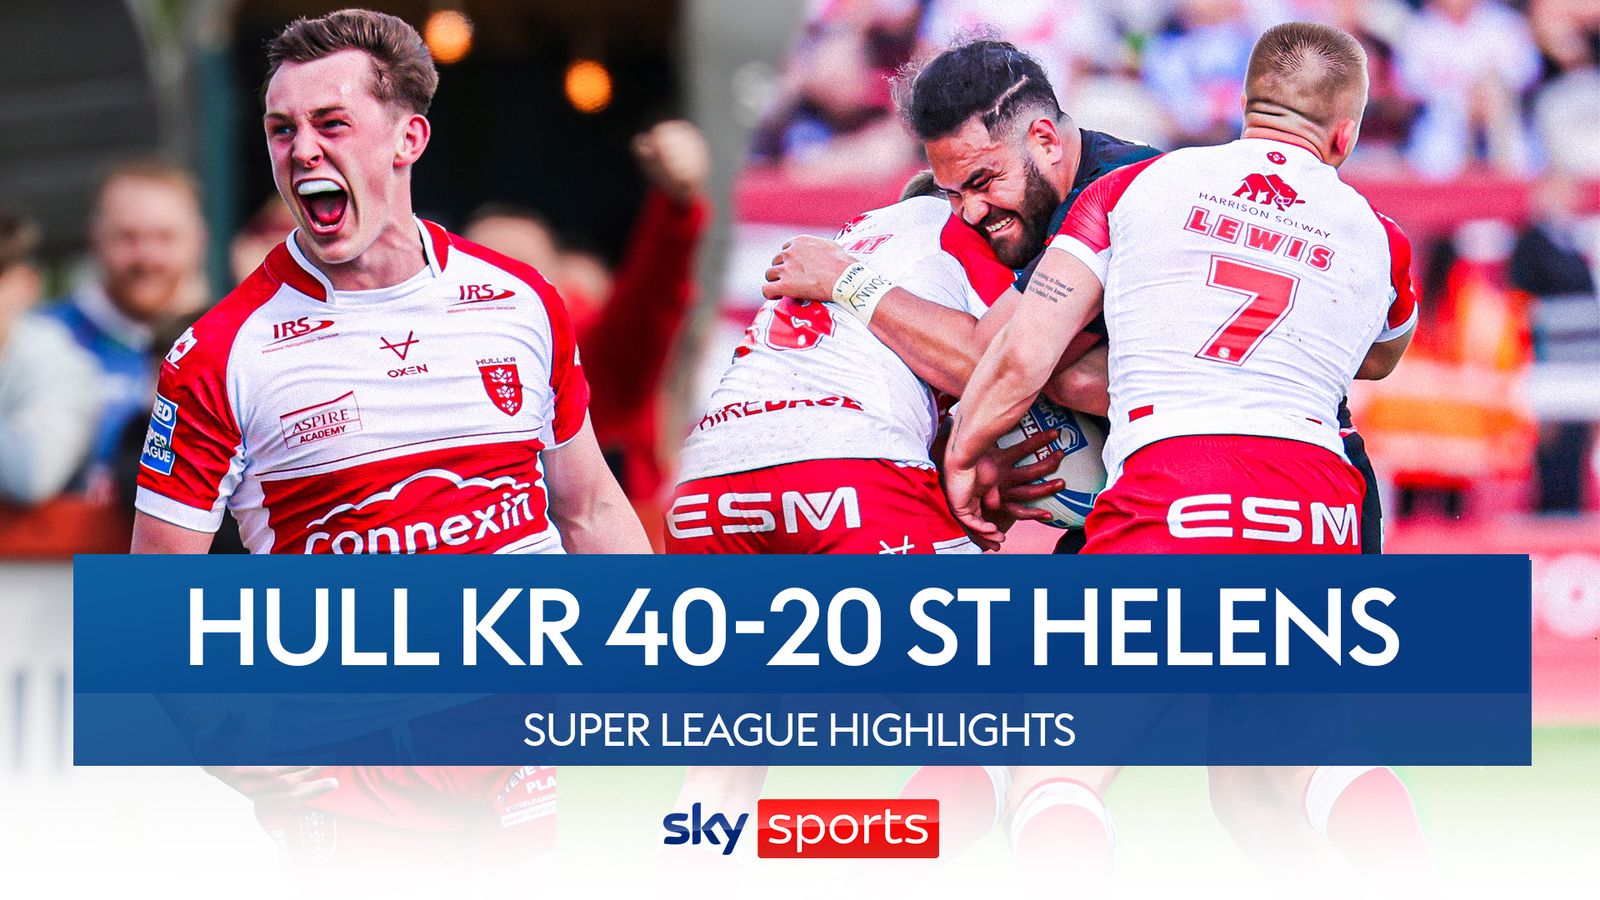 Hull KR 40-20 St Helens | Super League highlights